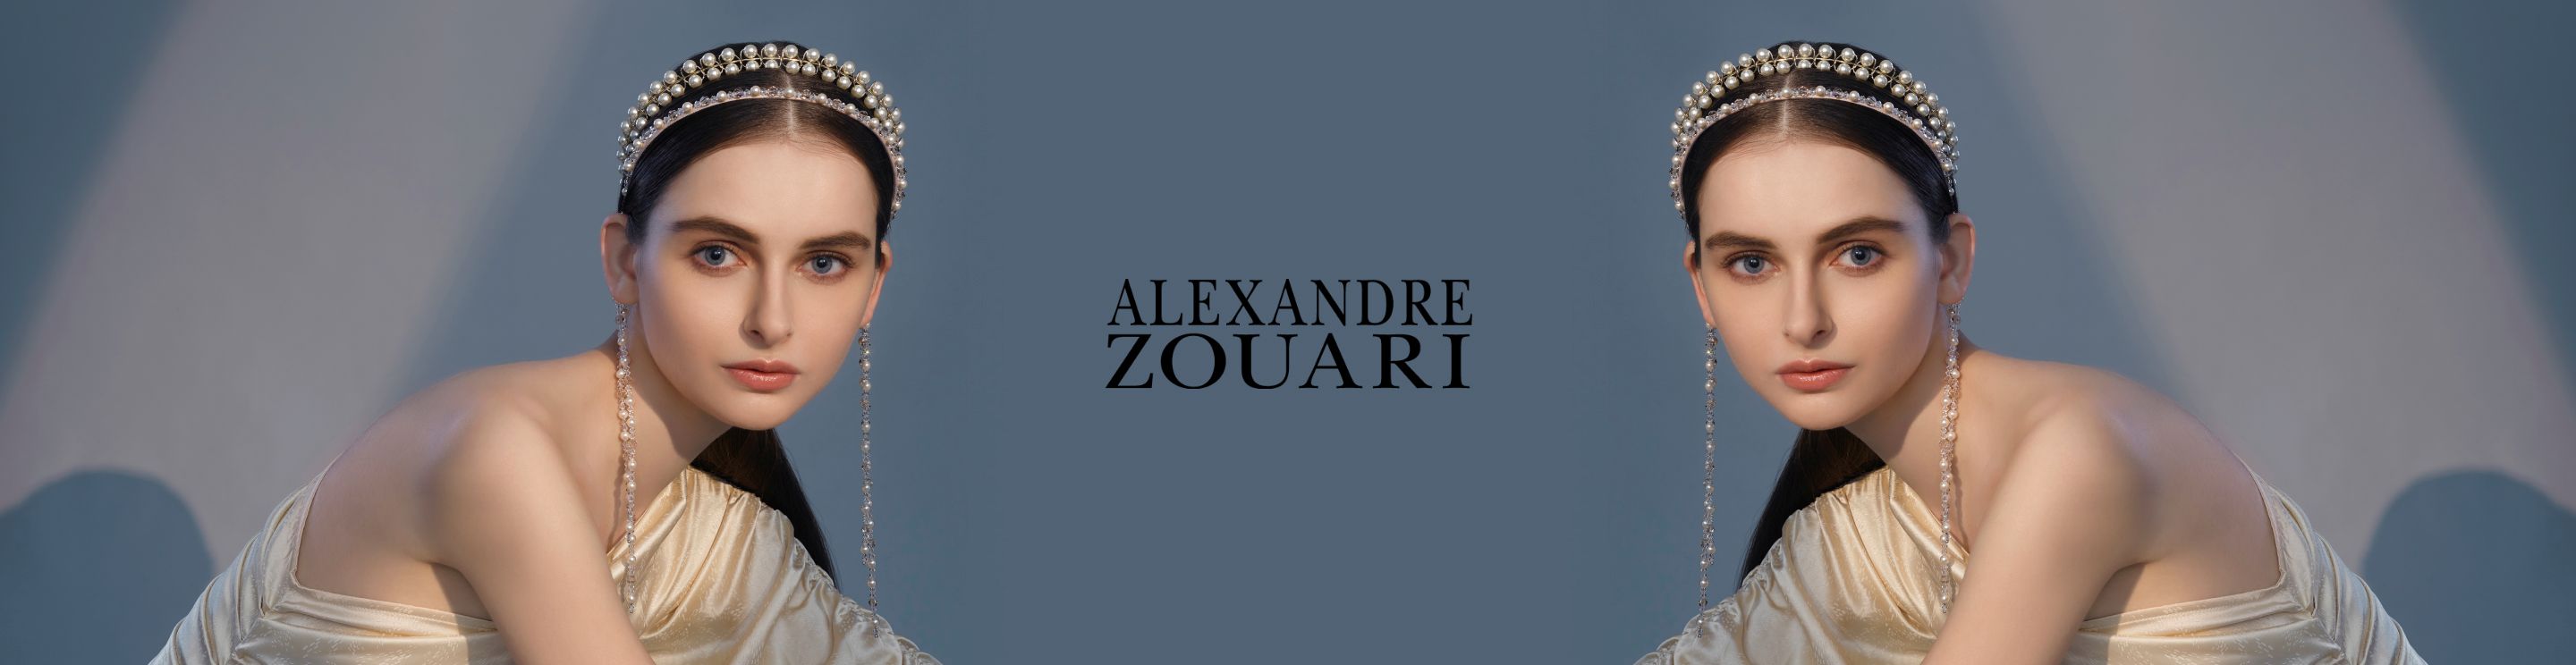 Alexandre Zouari